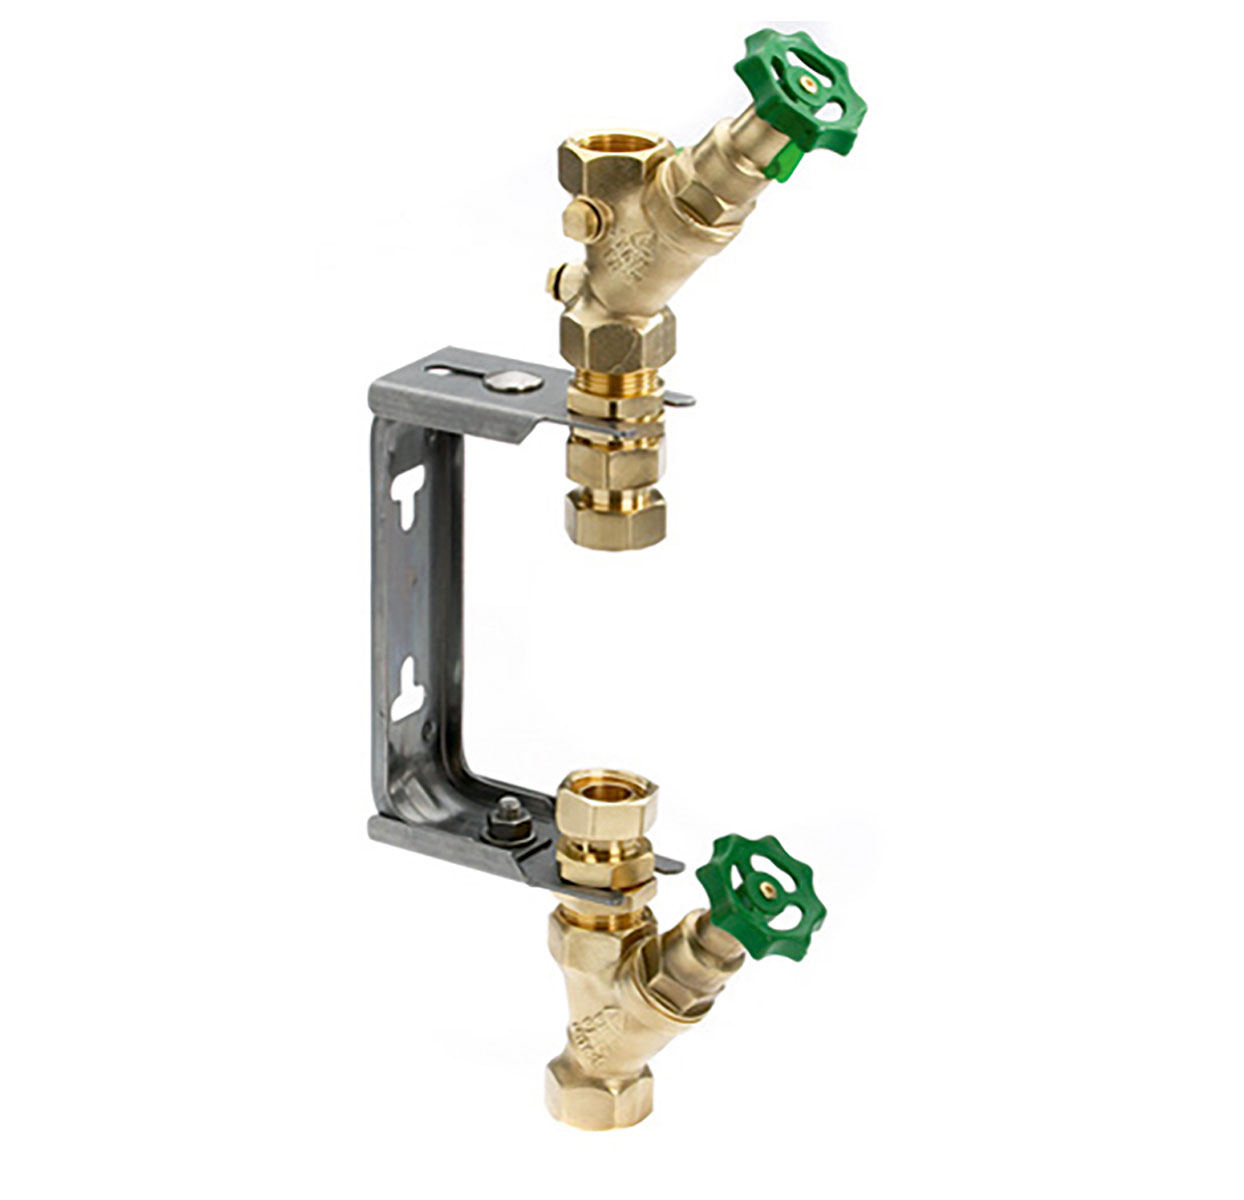 5202500 - Water meter Connection kit bracket adjustable, vertical installation